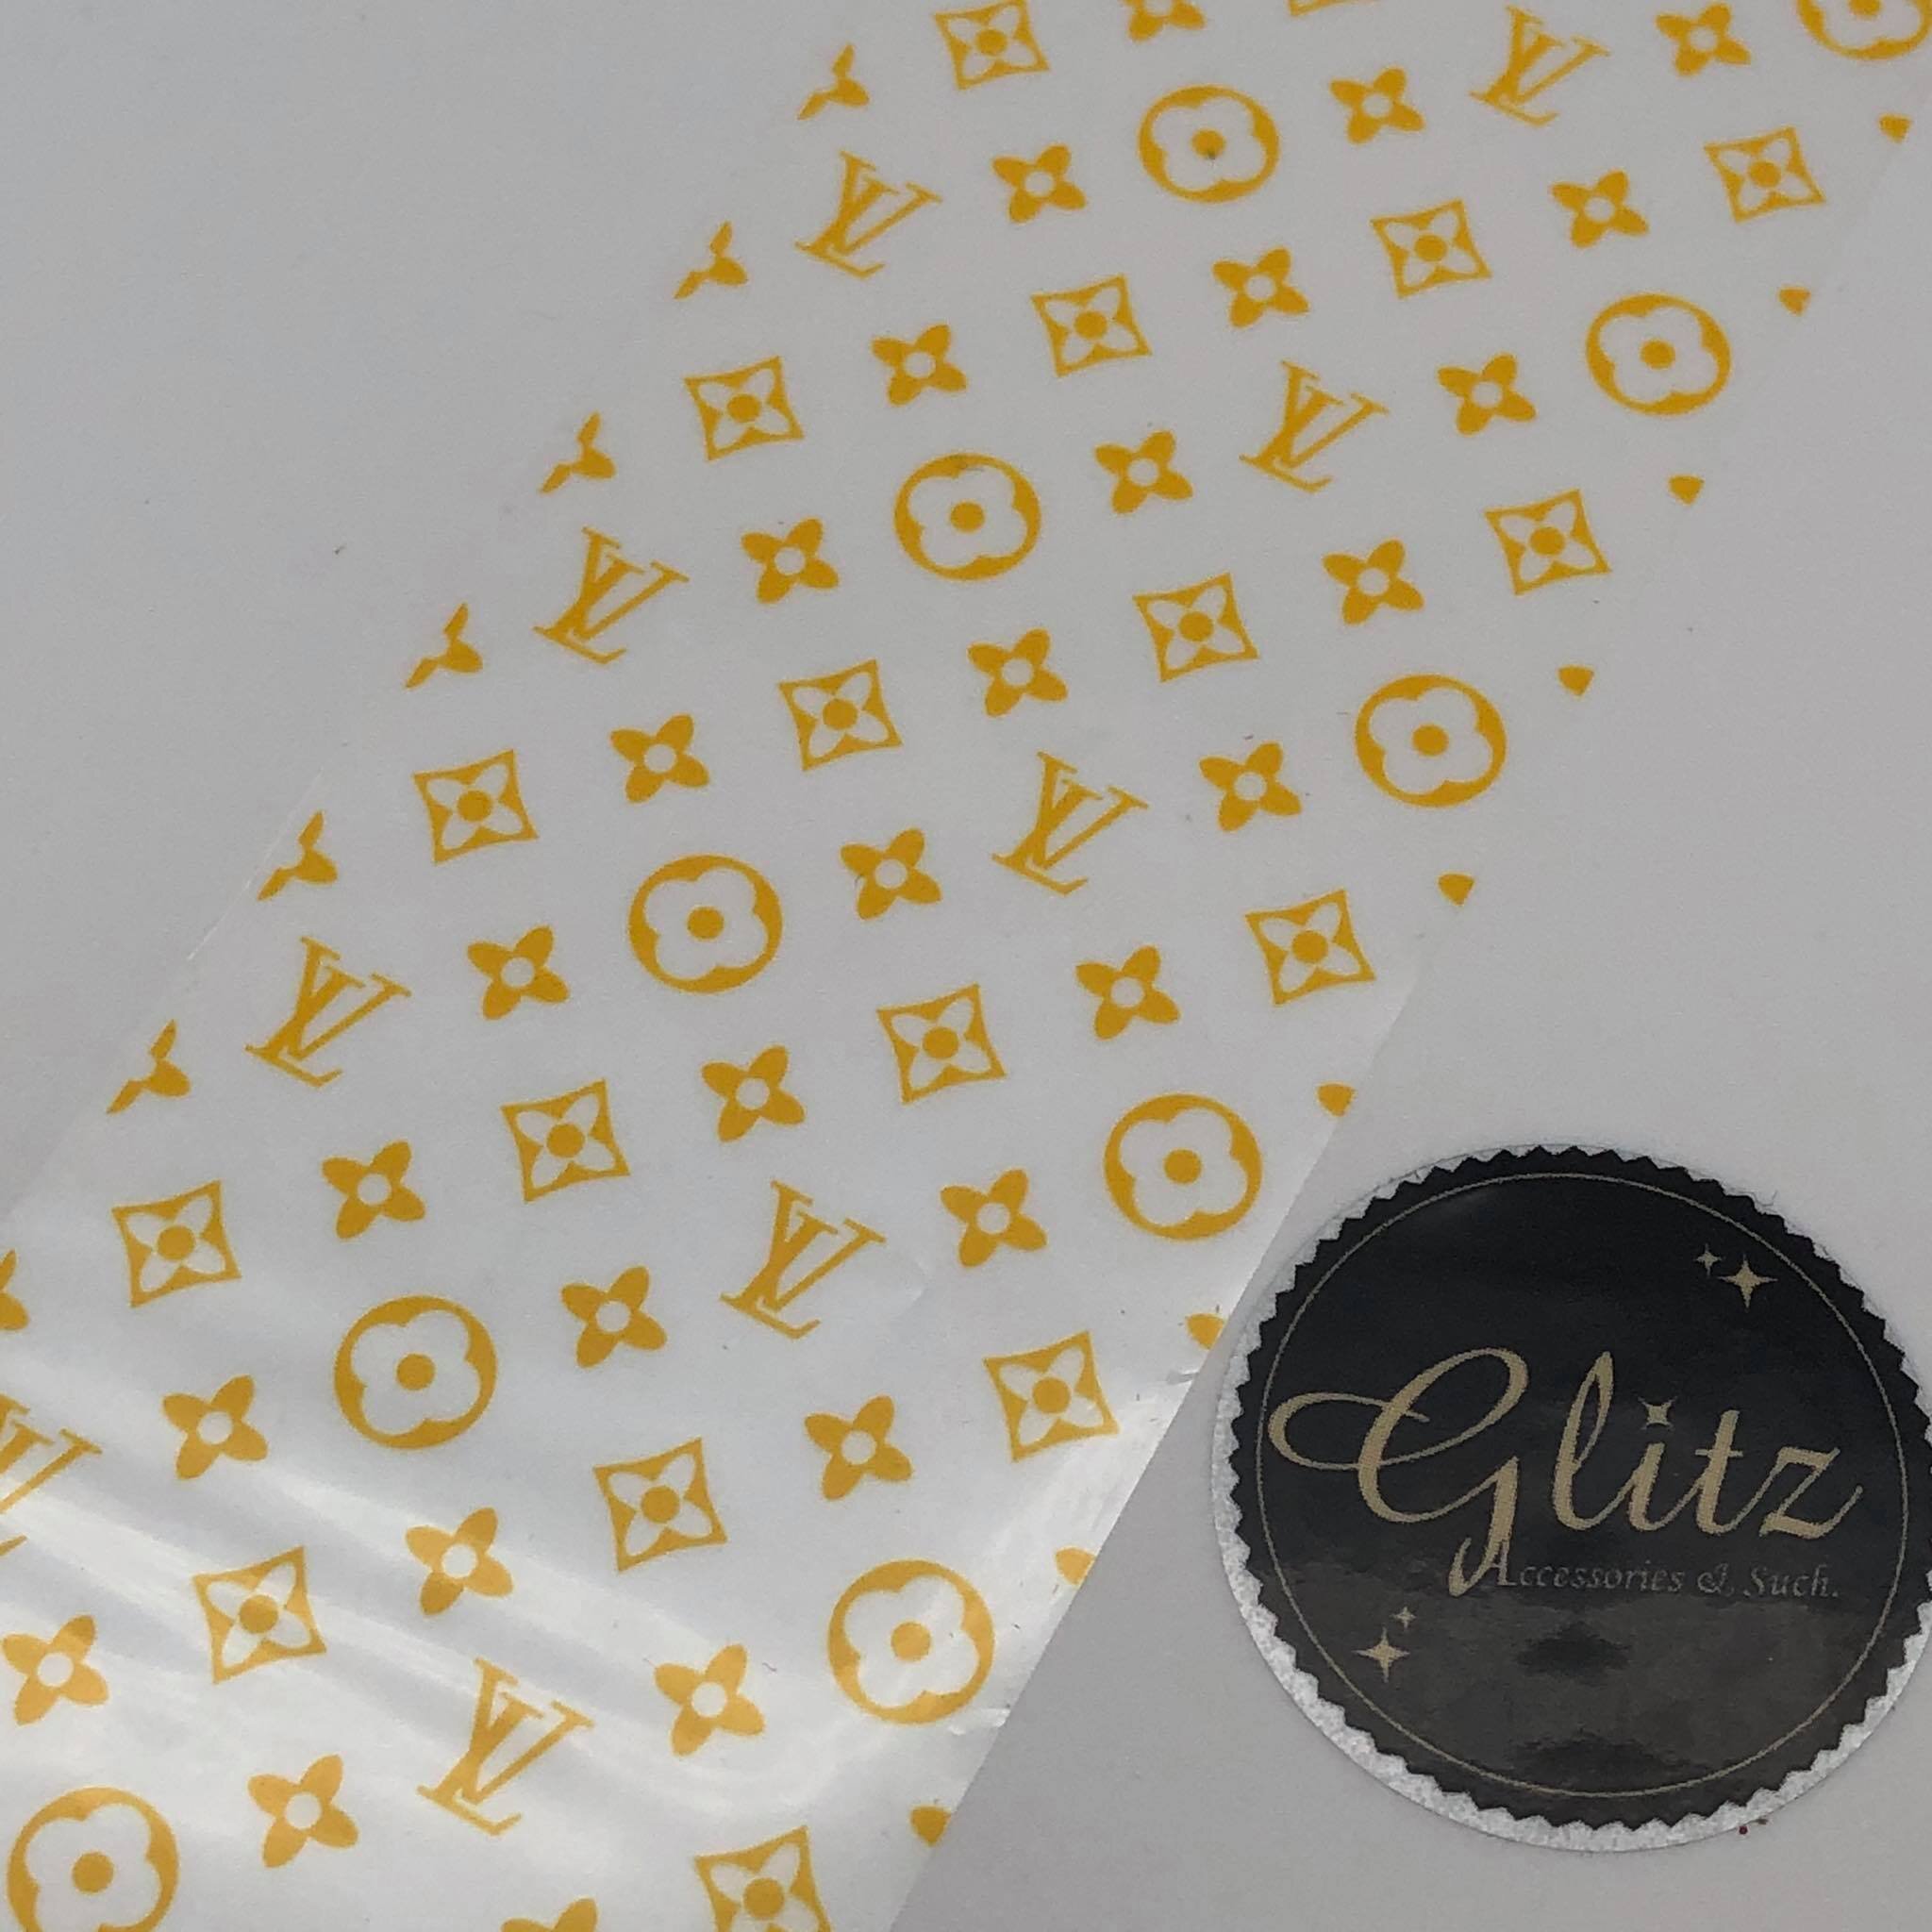 Clear Brown Louis - Transfer Foil Single — Glitz Accessories & Such.